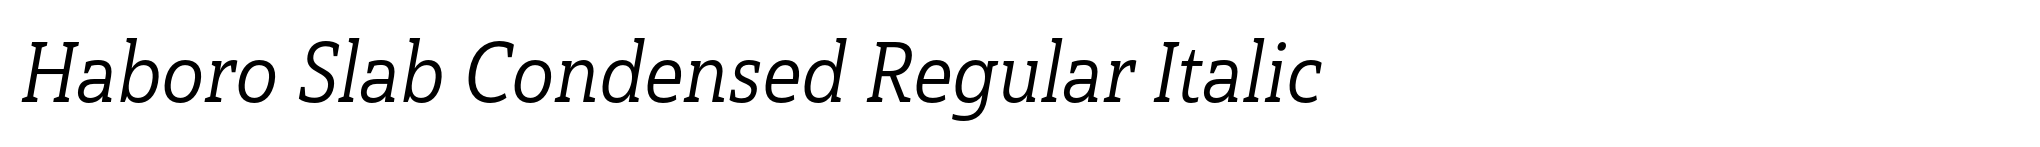 Haboro Slab Condensed Regular Italic image